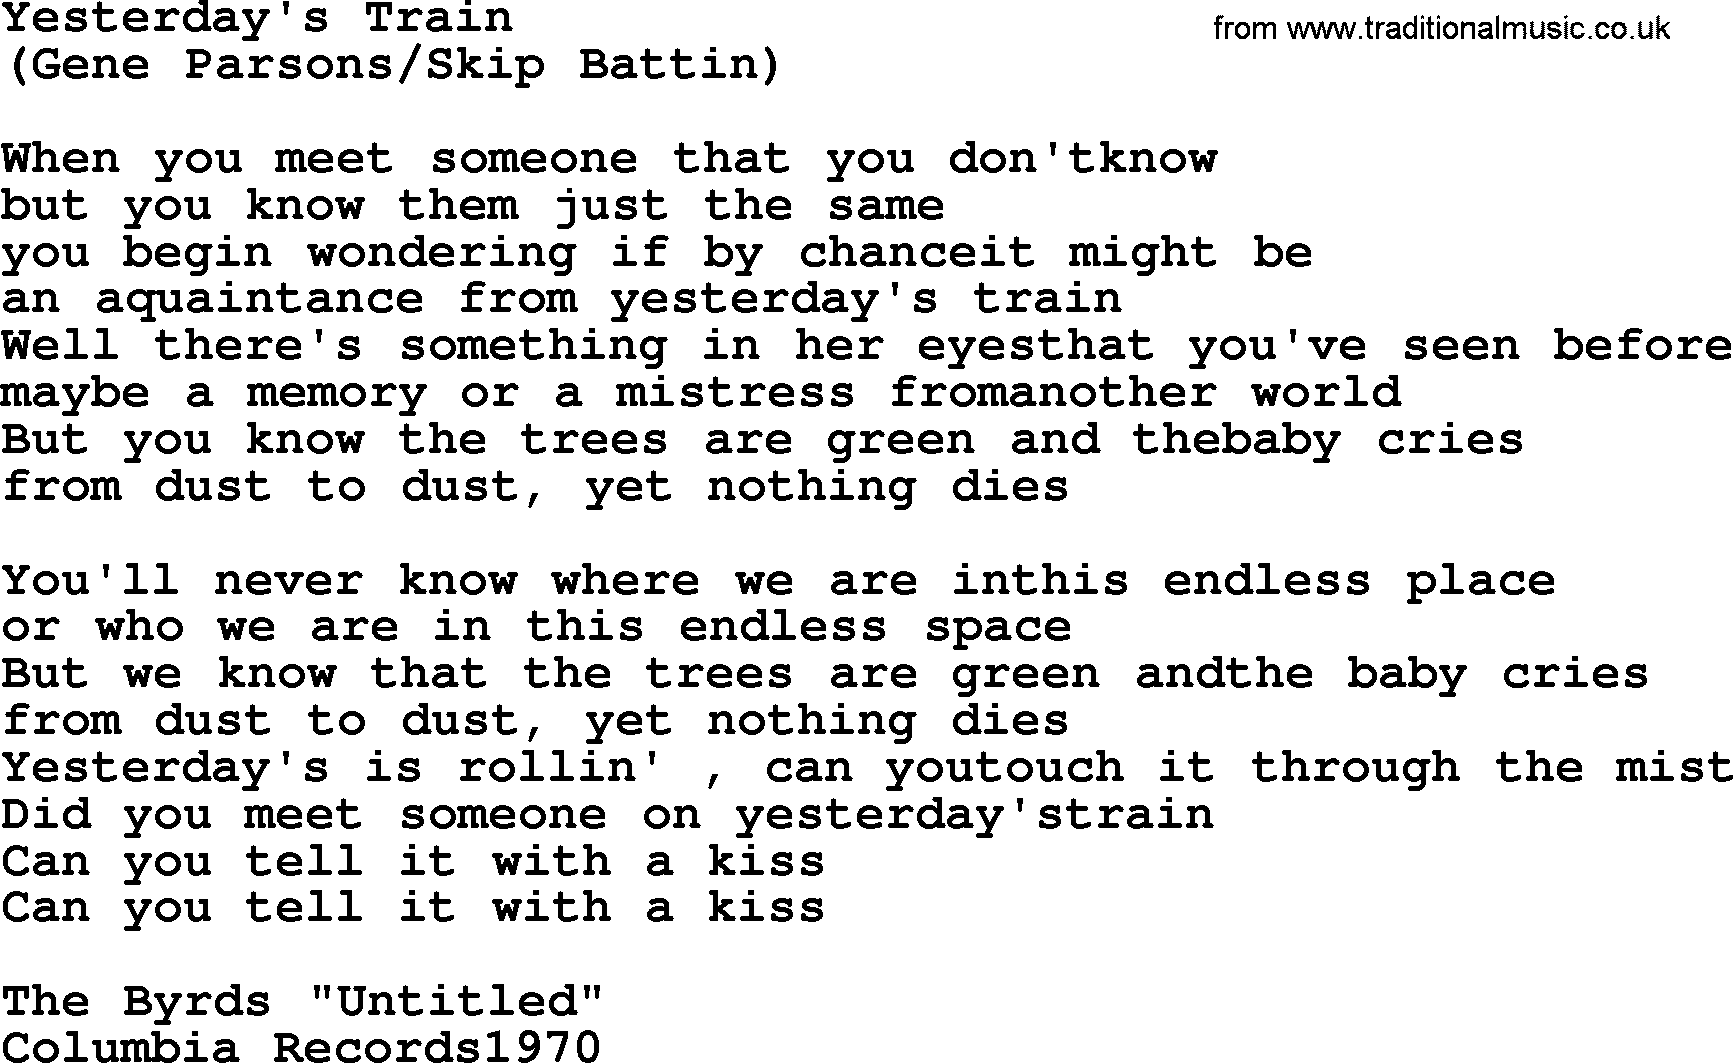 The Byrds song Yesterday's Train, lyrics